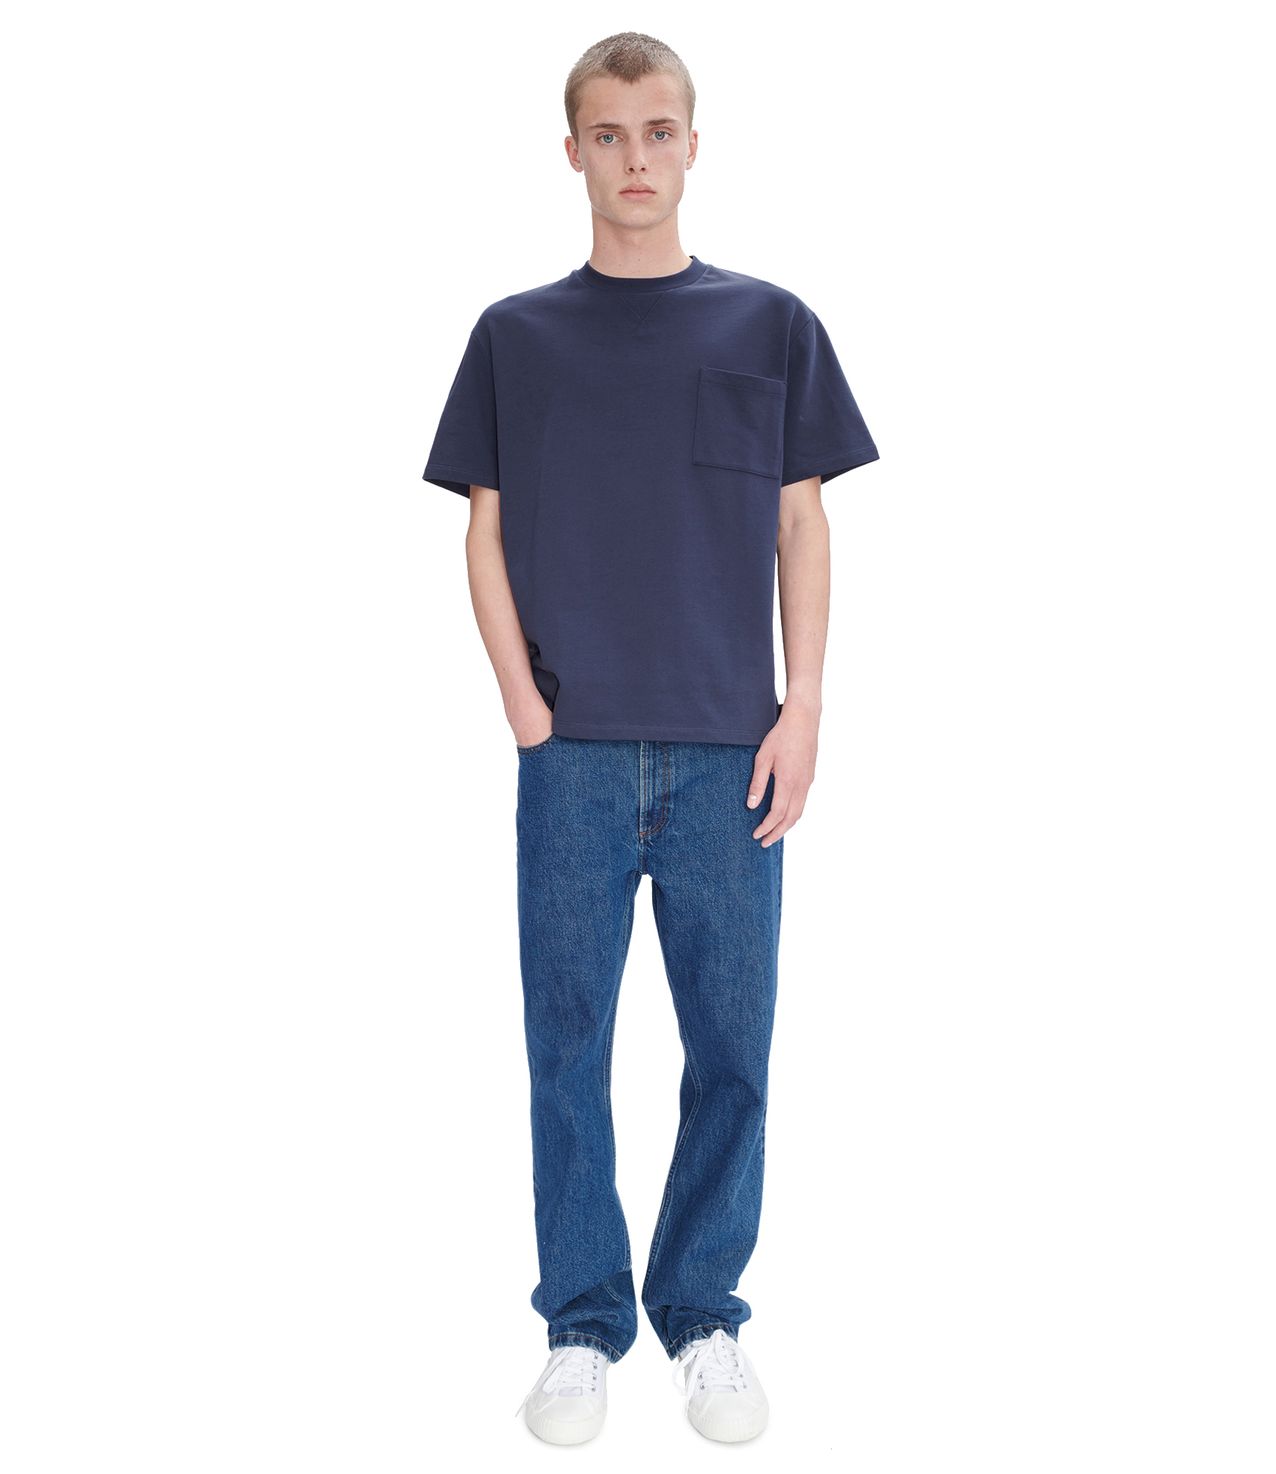 Johnny T-shirt NAVY BLUE APC